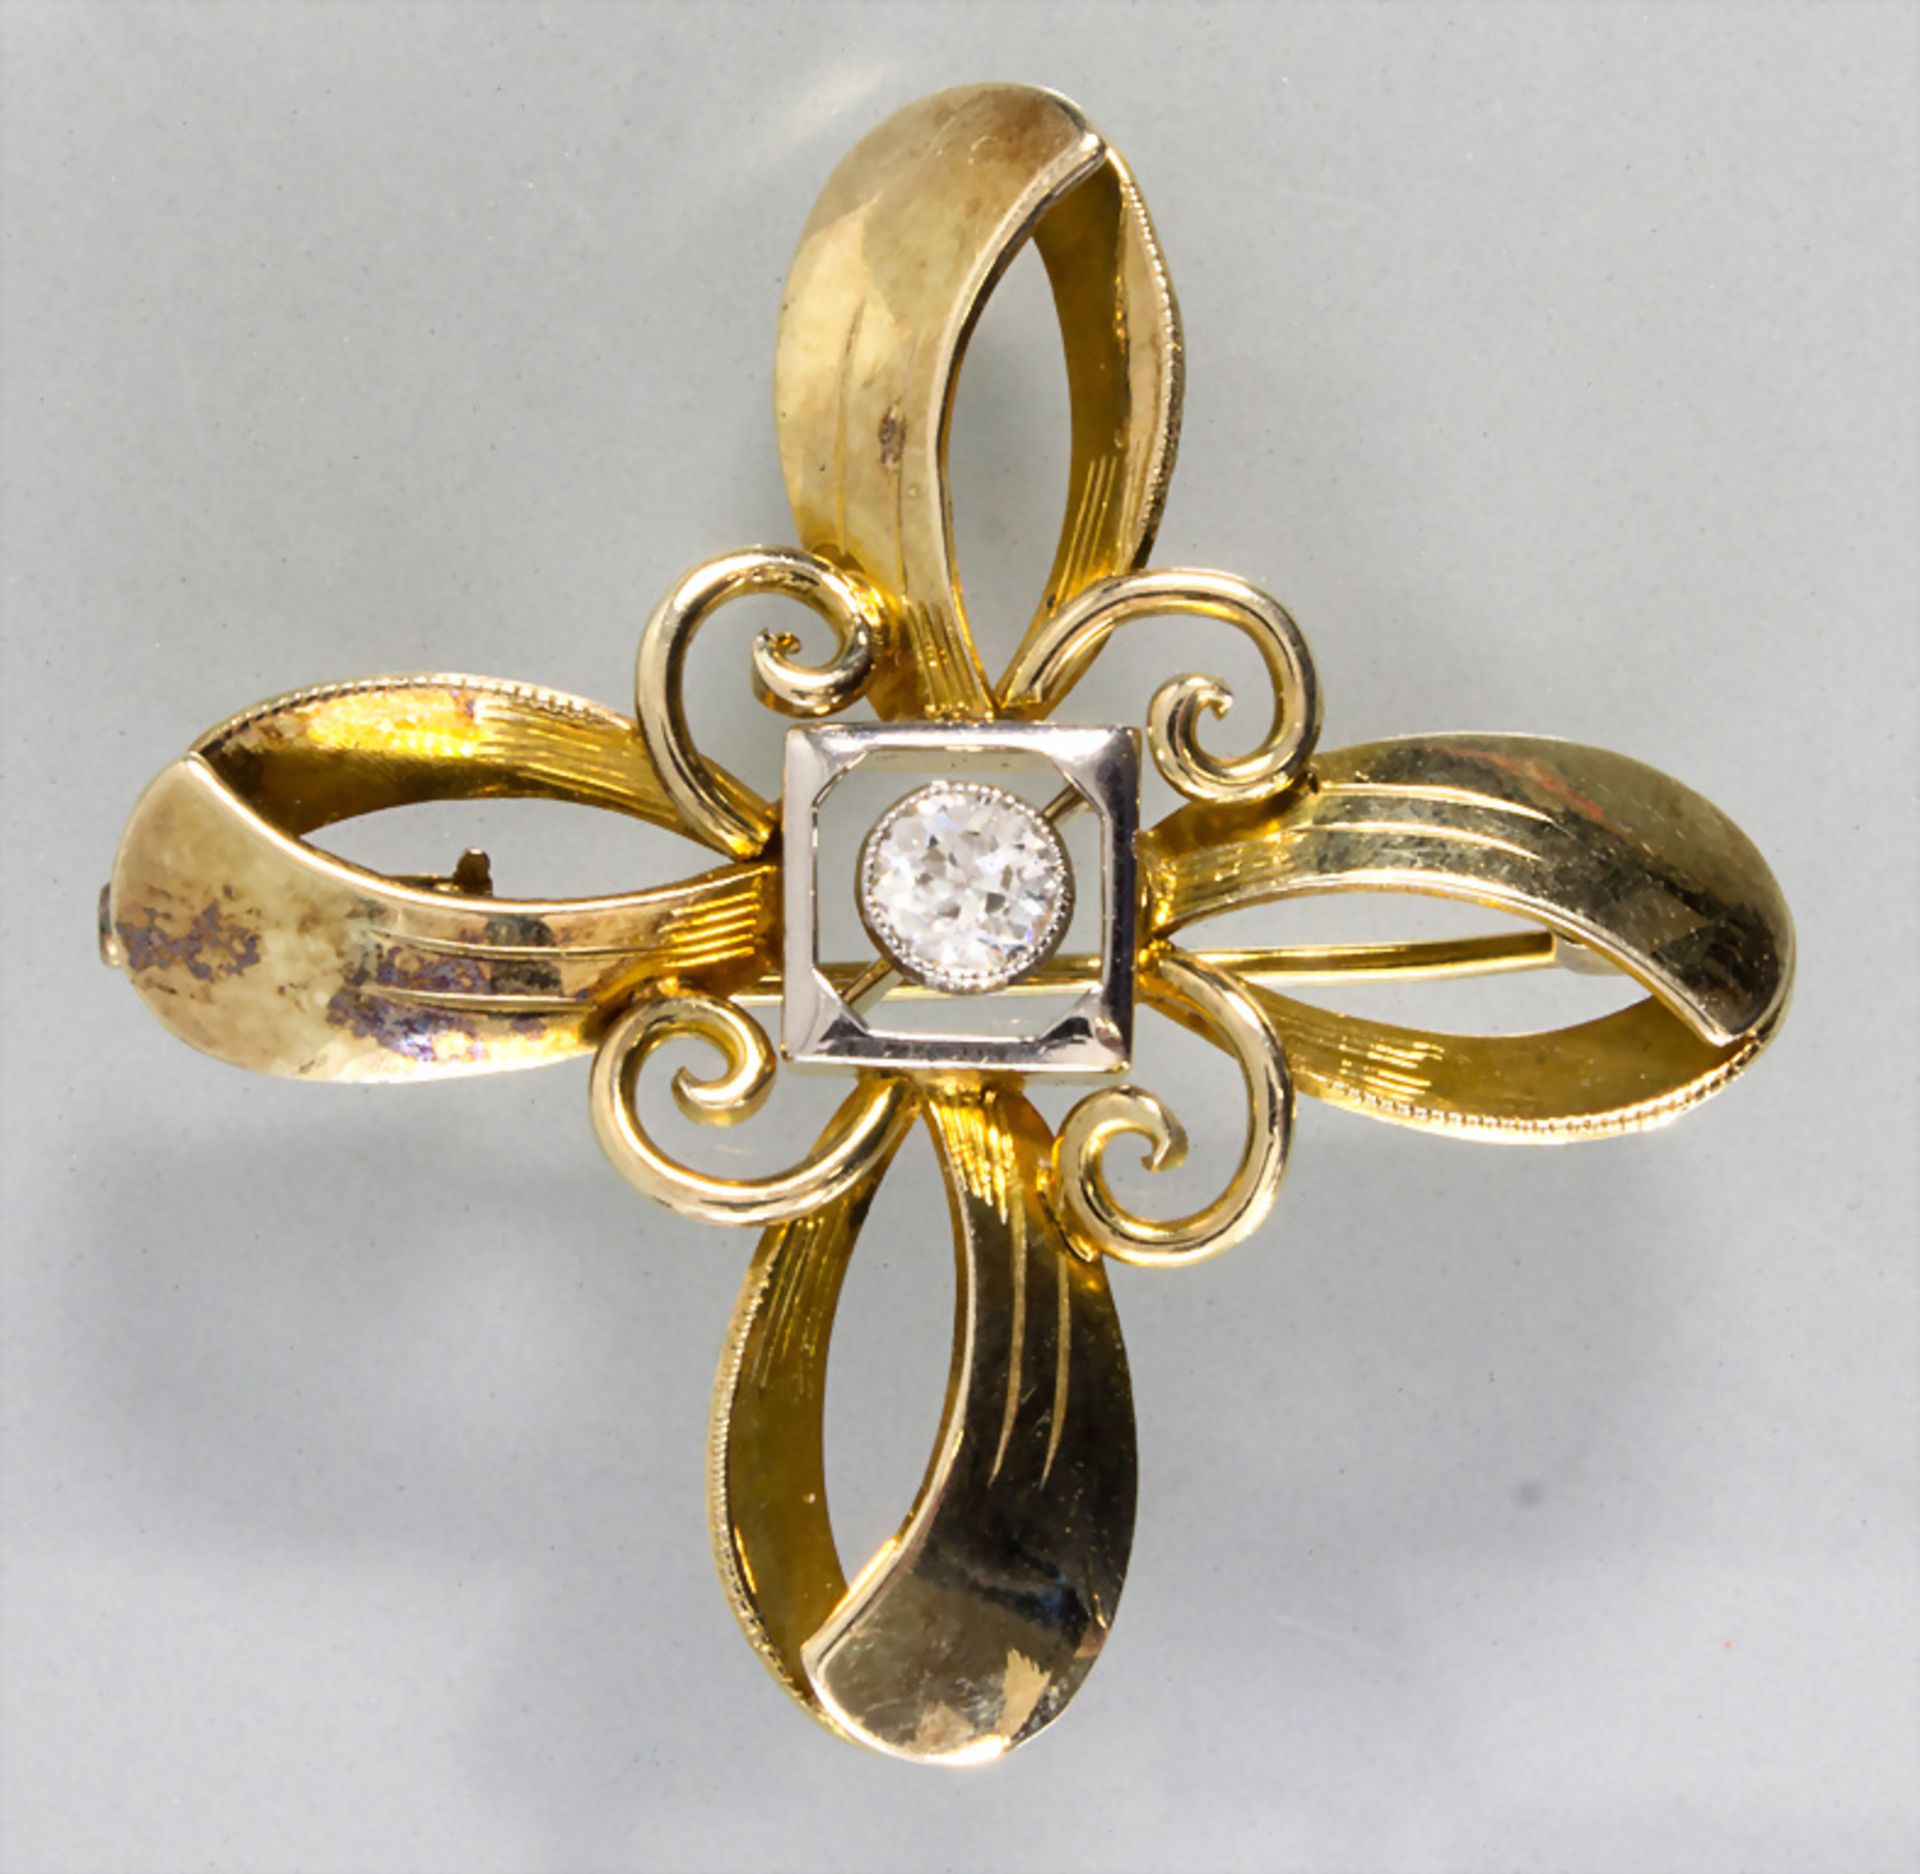 Goldbrosche mit Solitär / A 14k gold brooch with a diamond solitaire